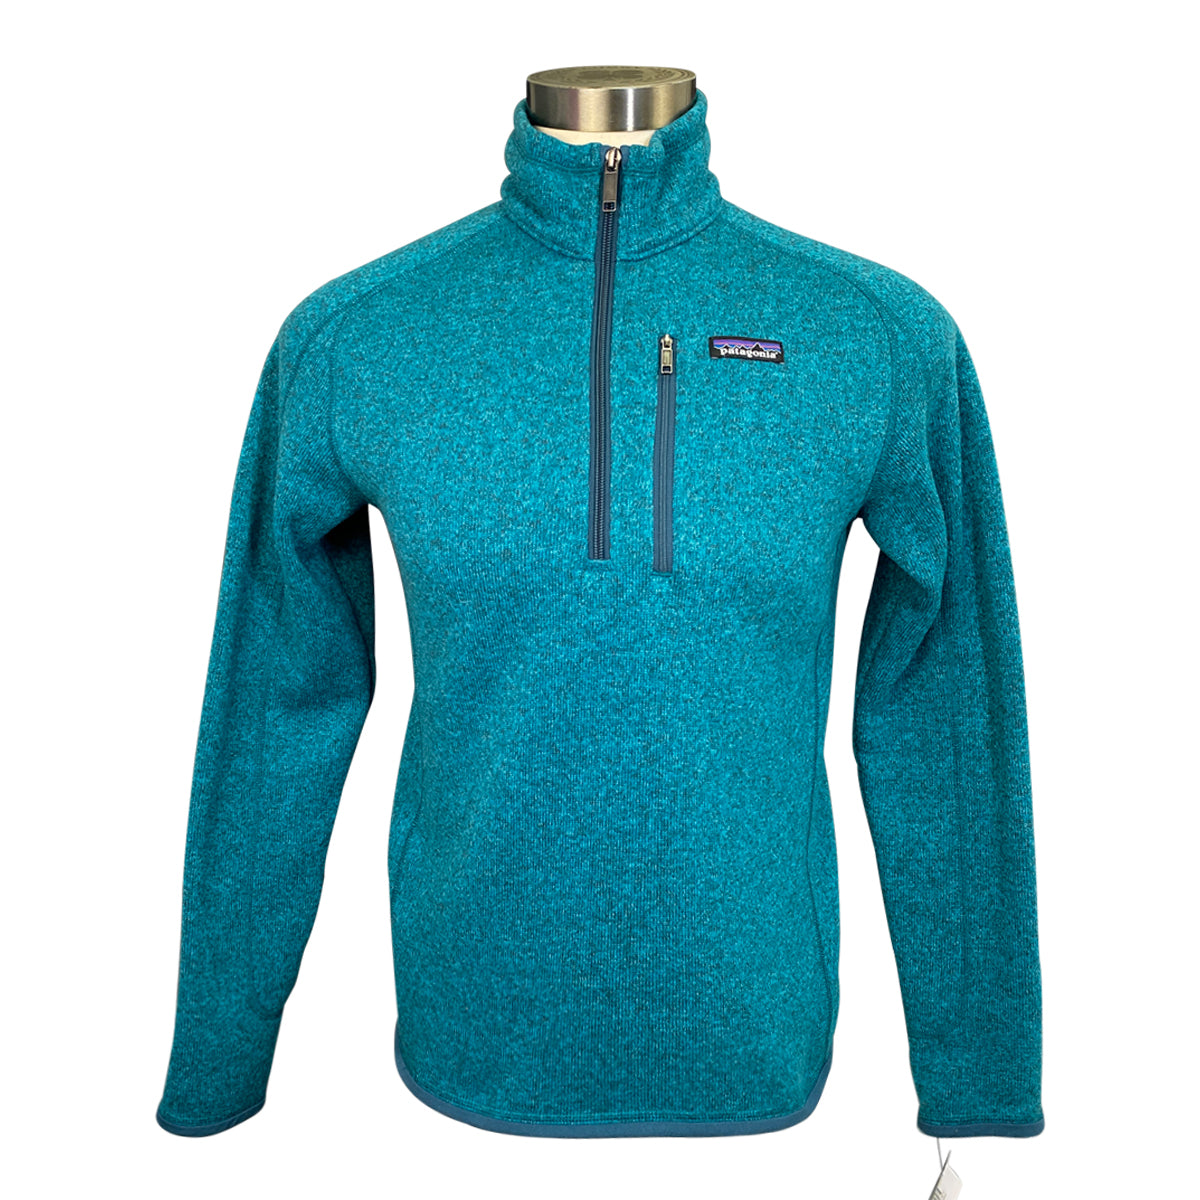 Patagonia 'Better Sweater' 1/4 Zip Fleece in Bright Blue Heather 